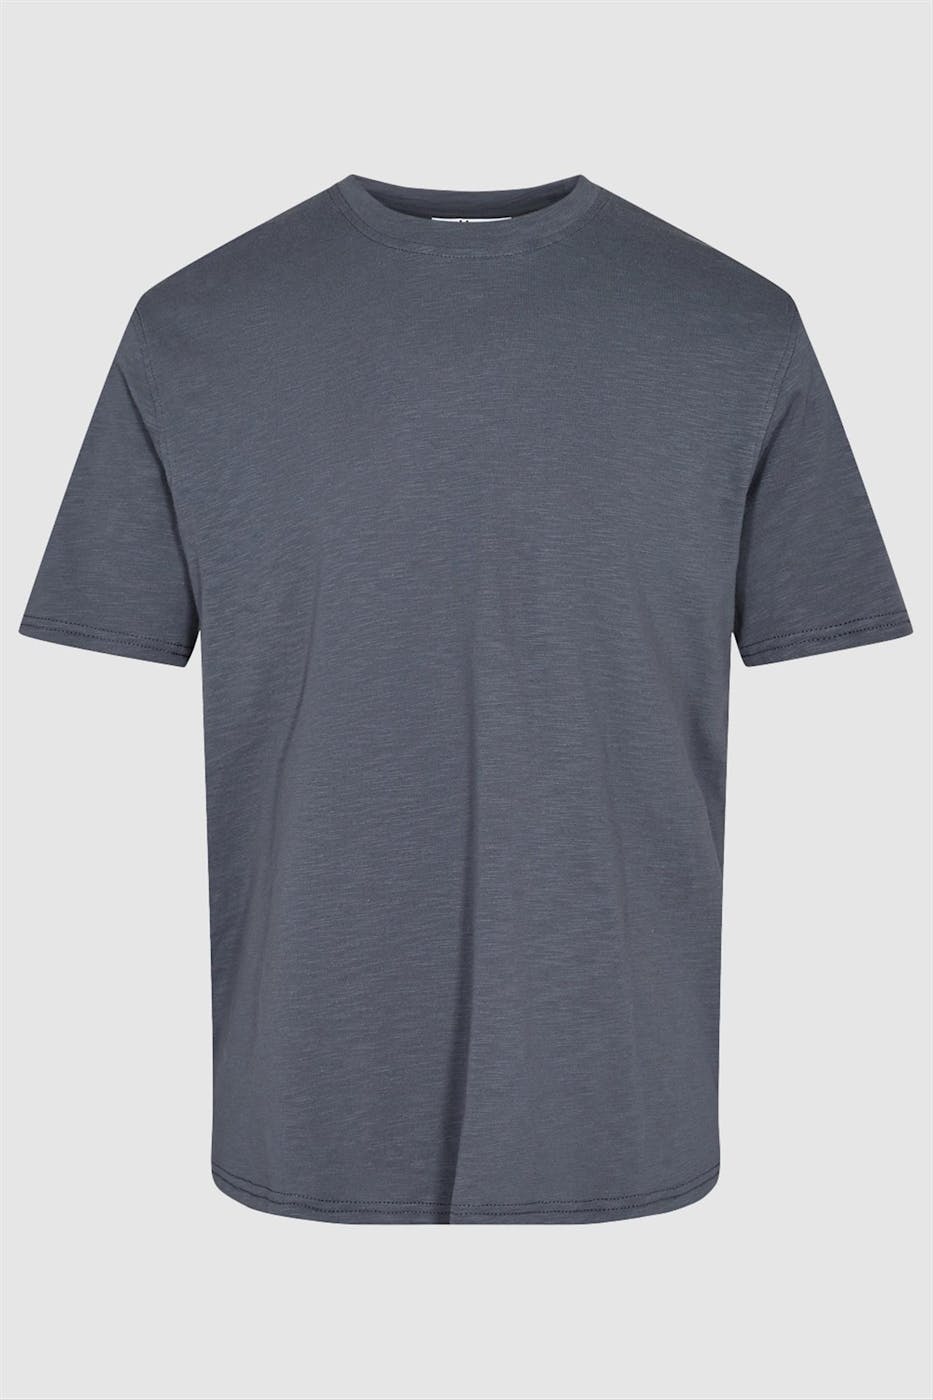 Minimum - Grijze Heon T-shirt